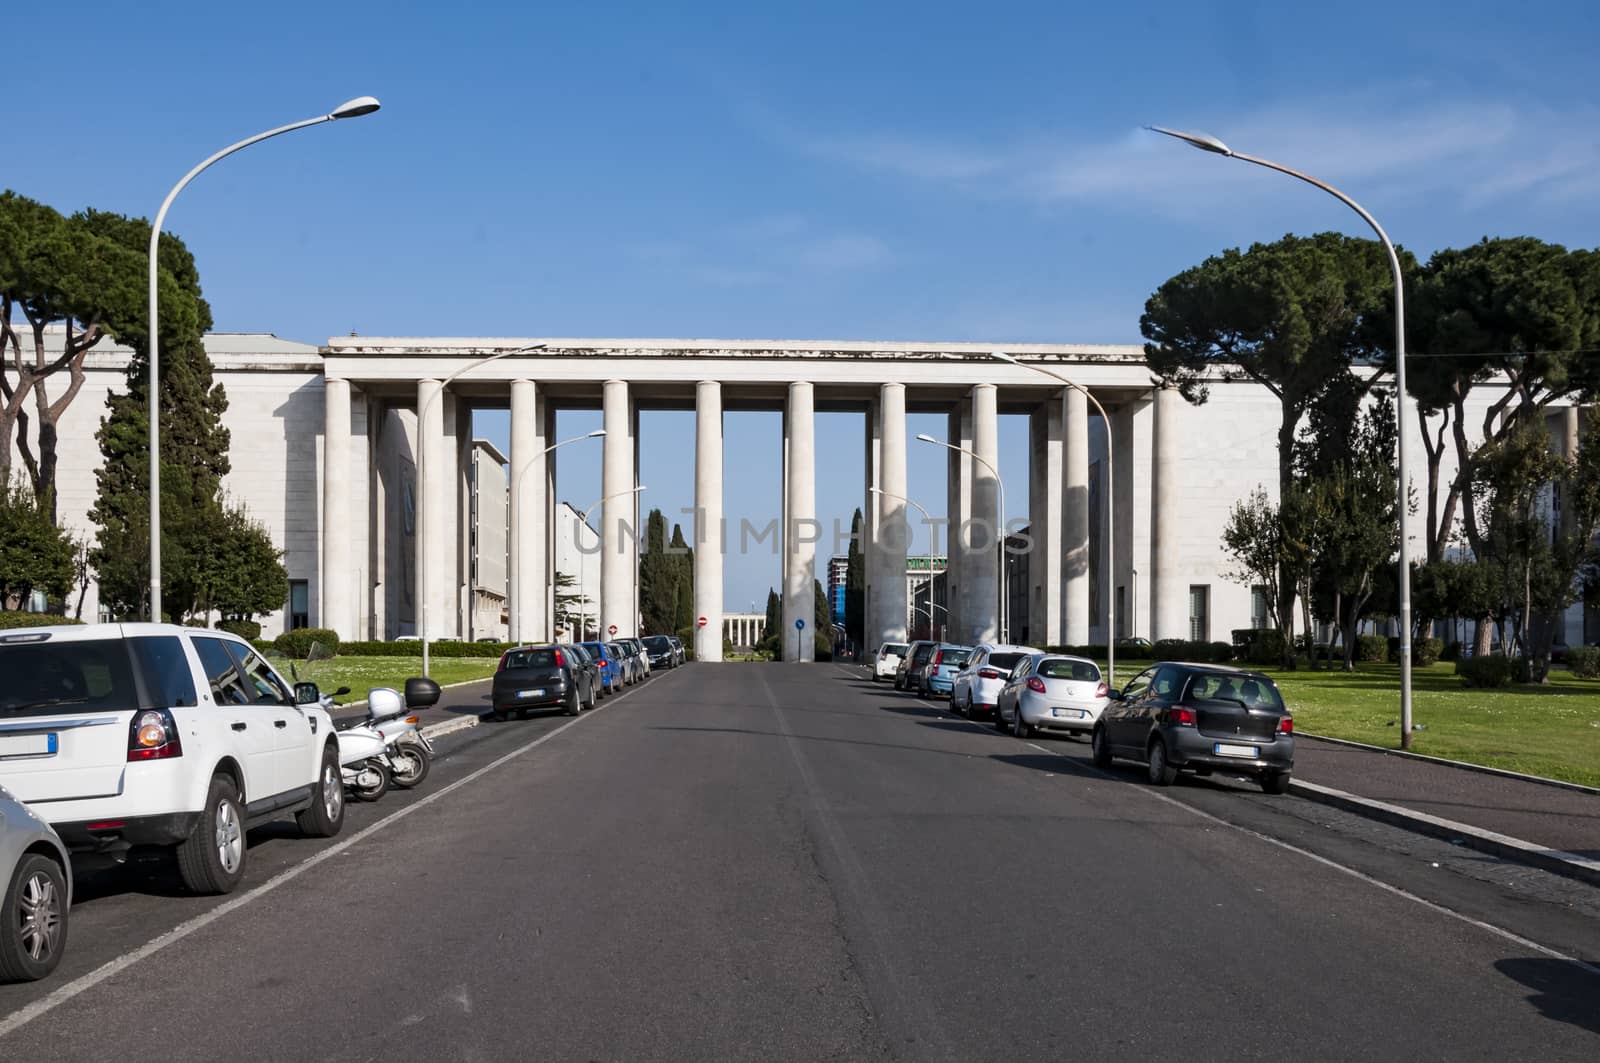 Eur district in Rome by edella